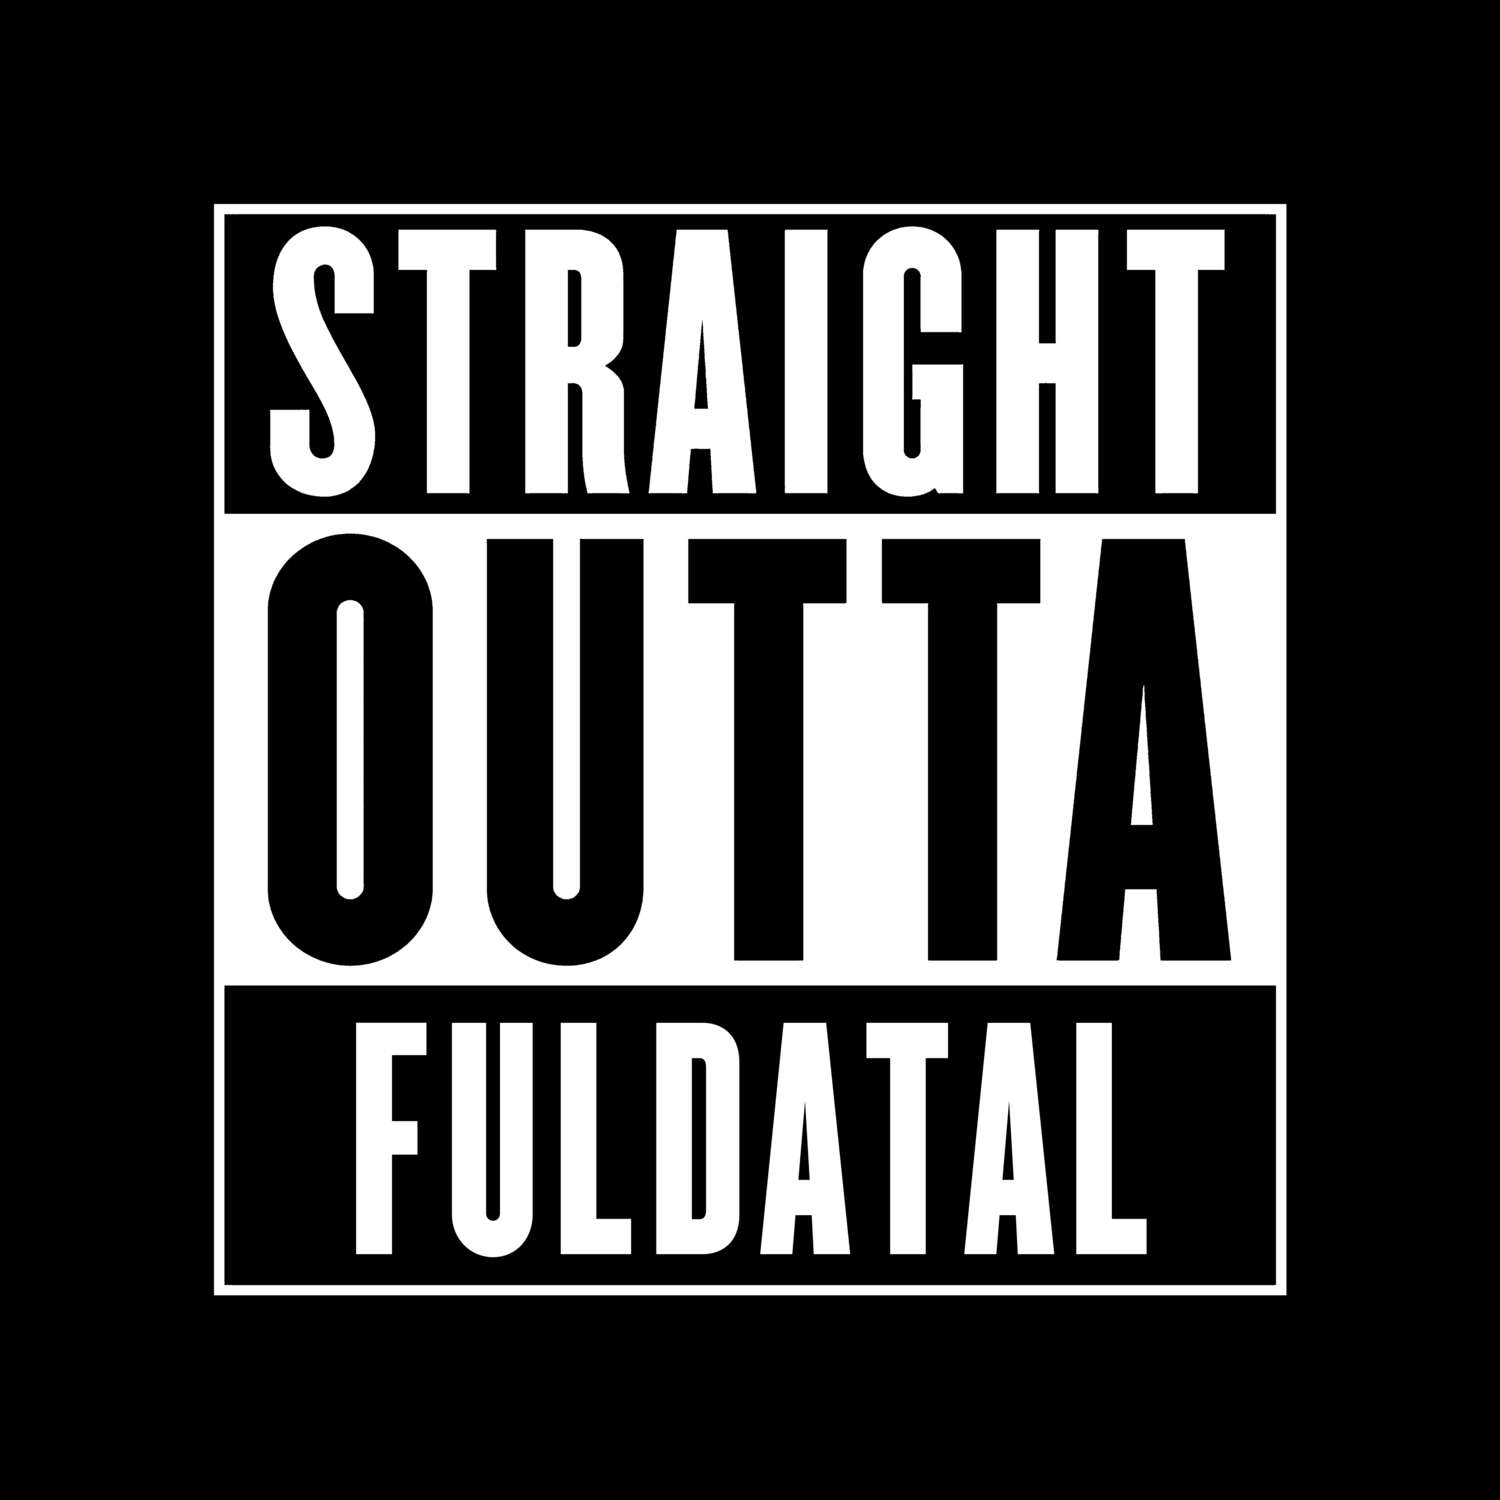 Fuldatal T-Shirt »Straight Outta«